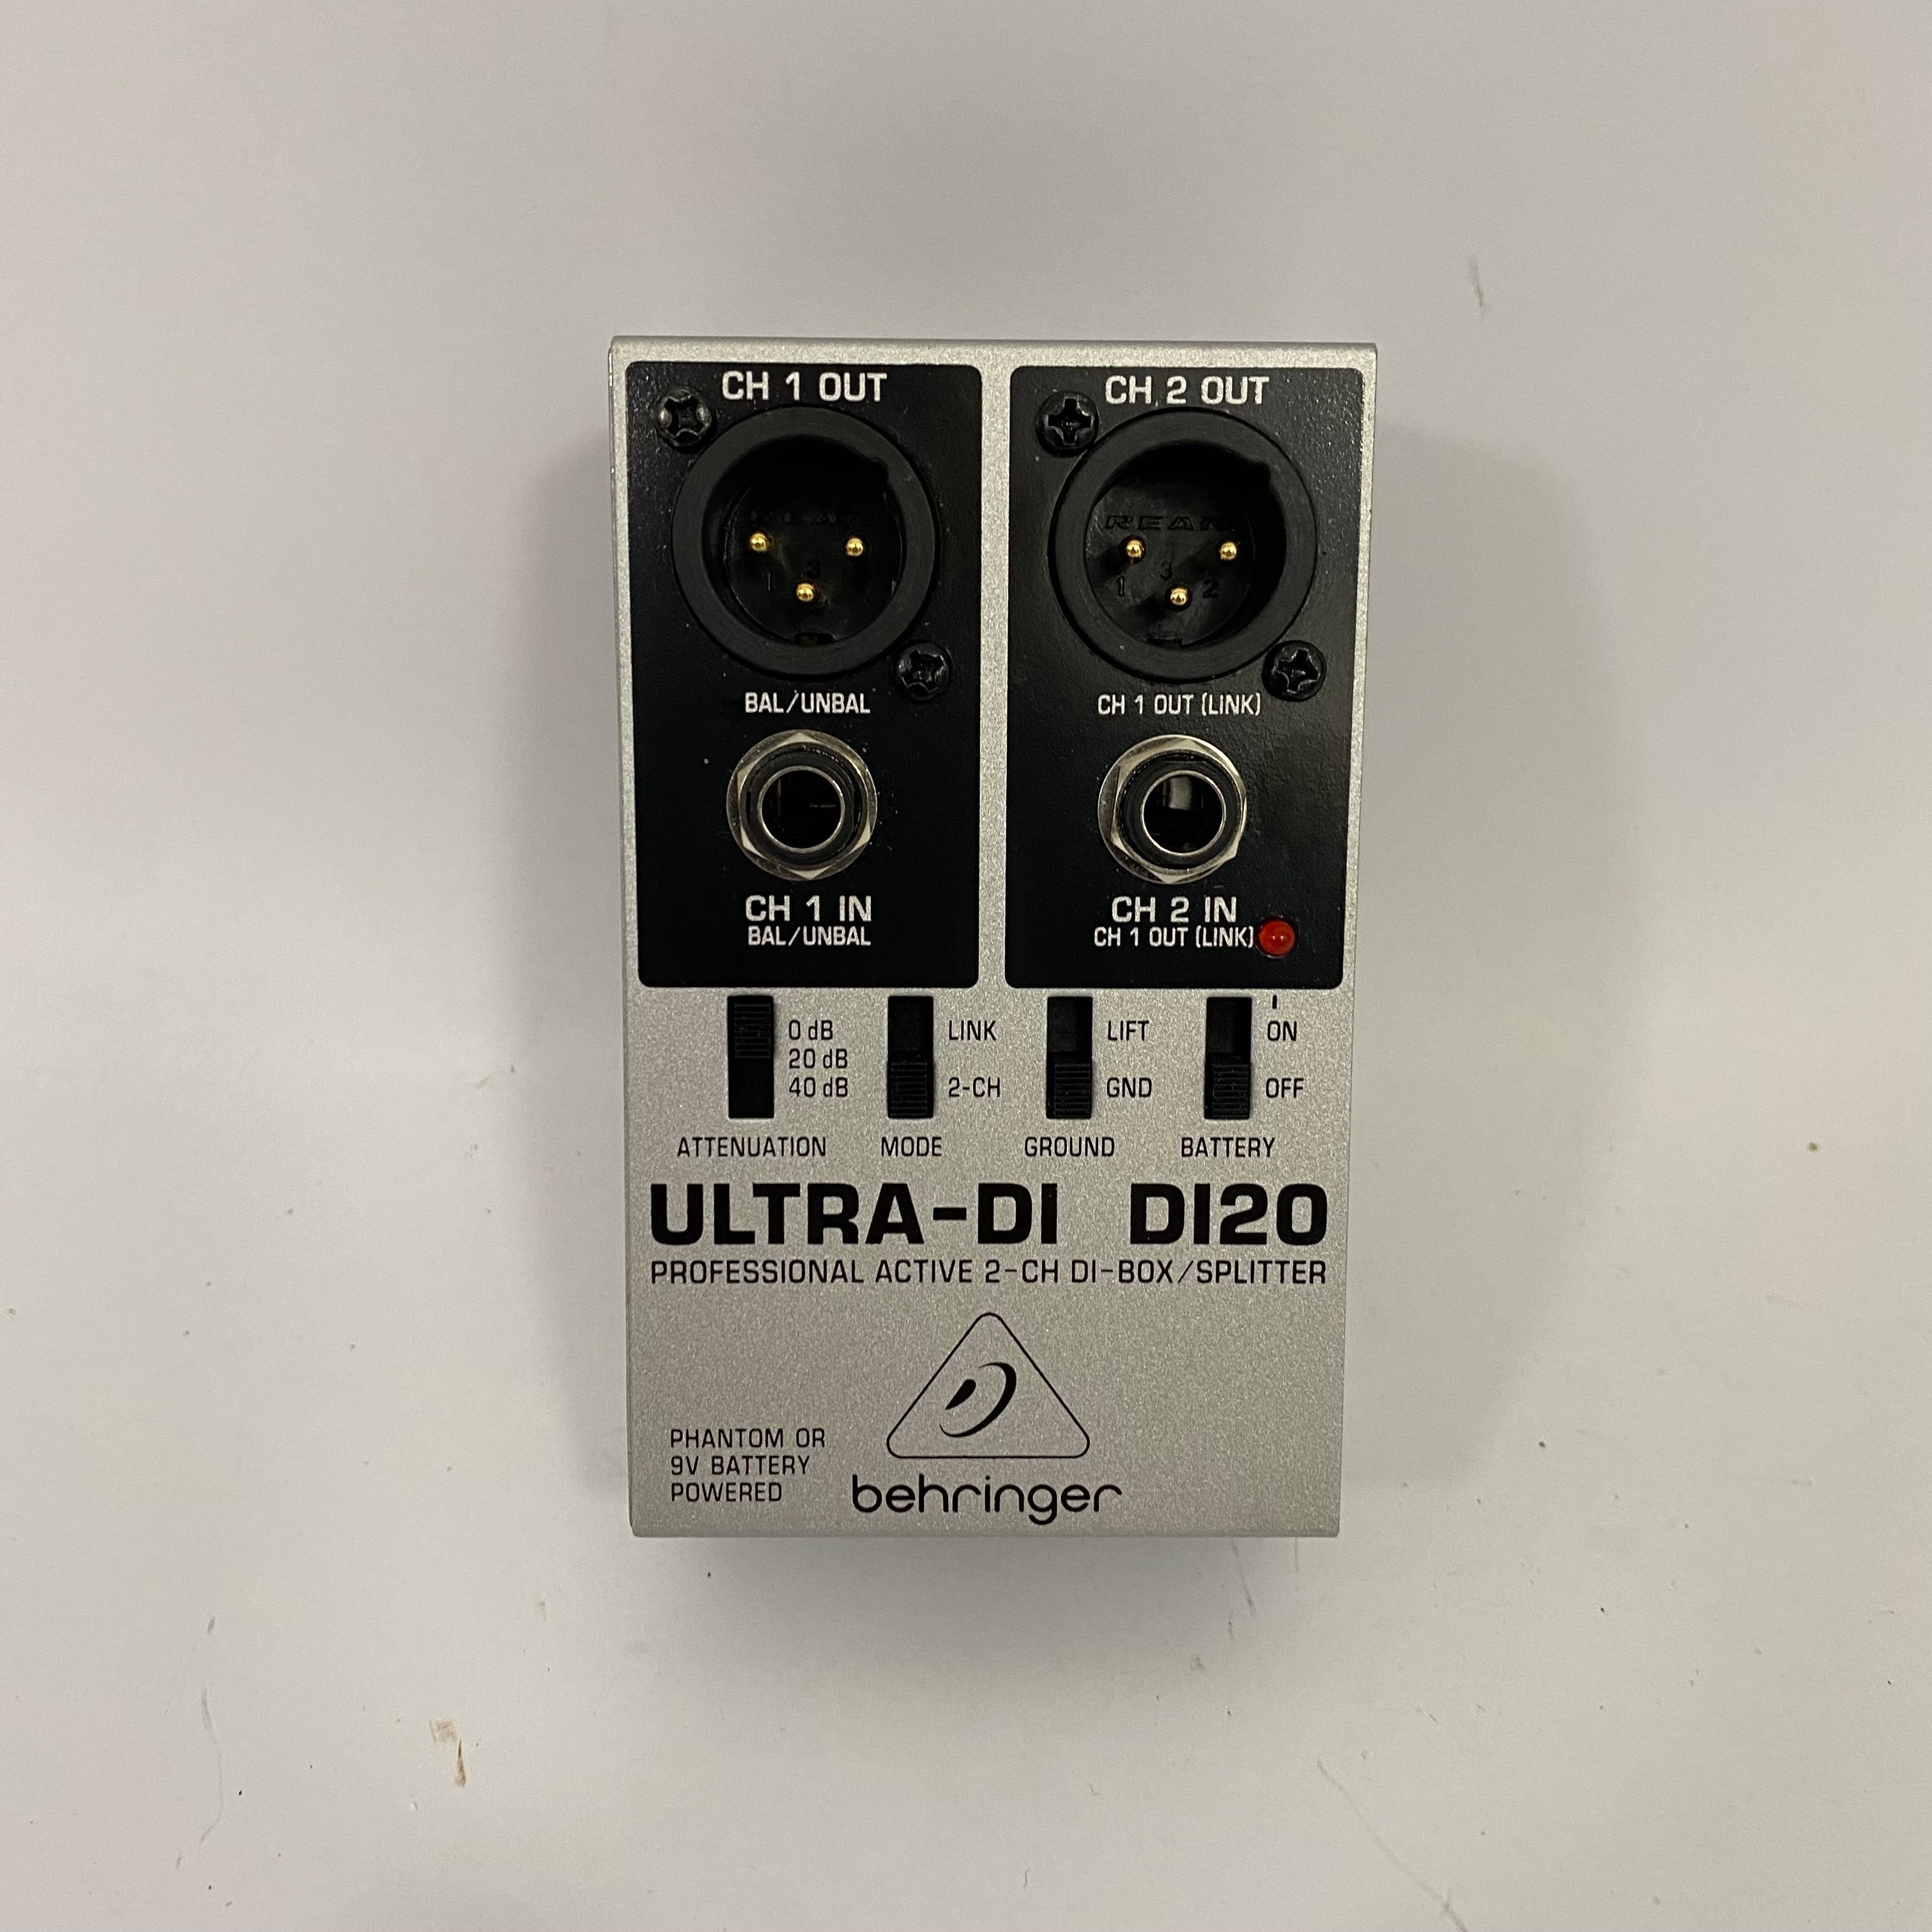 Behringer Ultra-DI DI20 2-channel Active Direct Box / Splitter